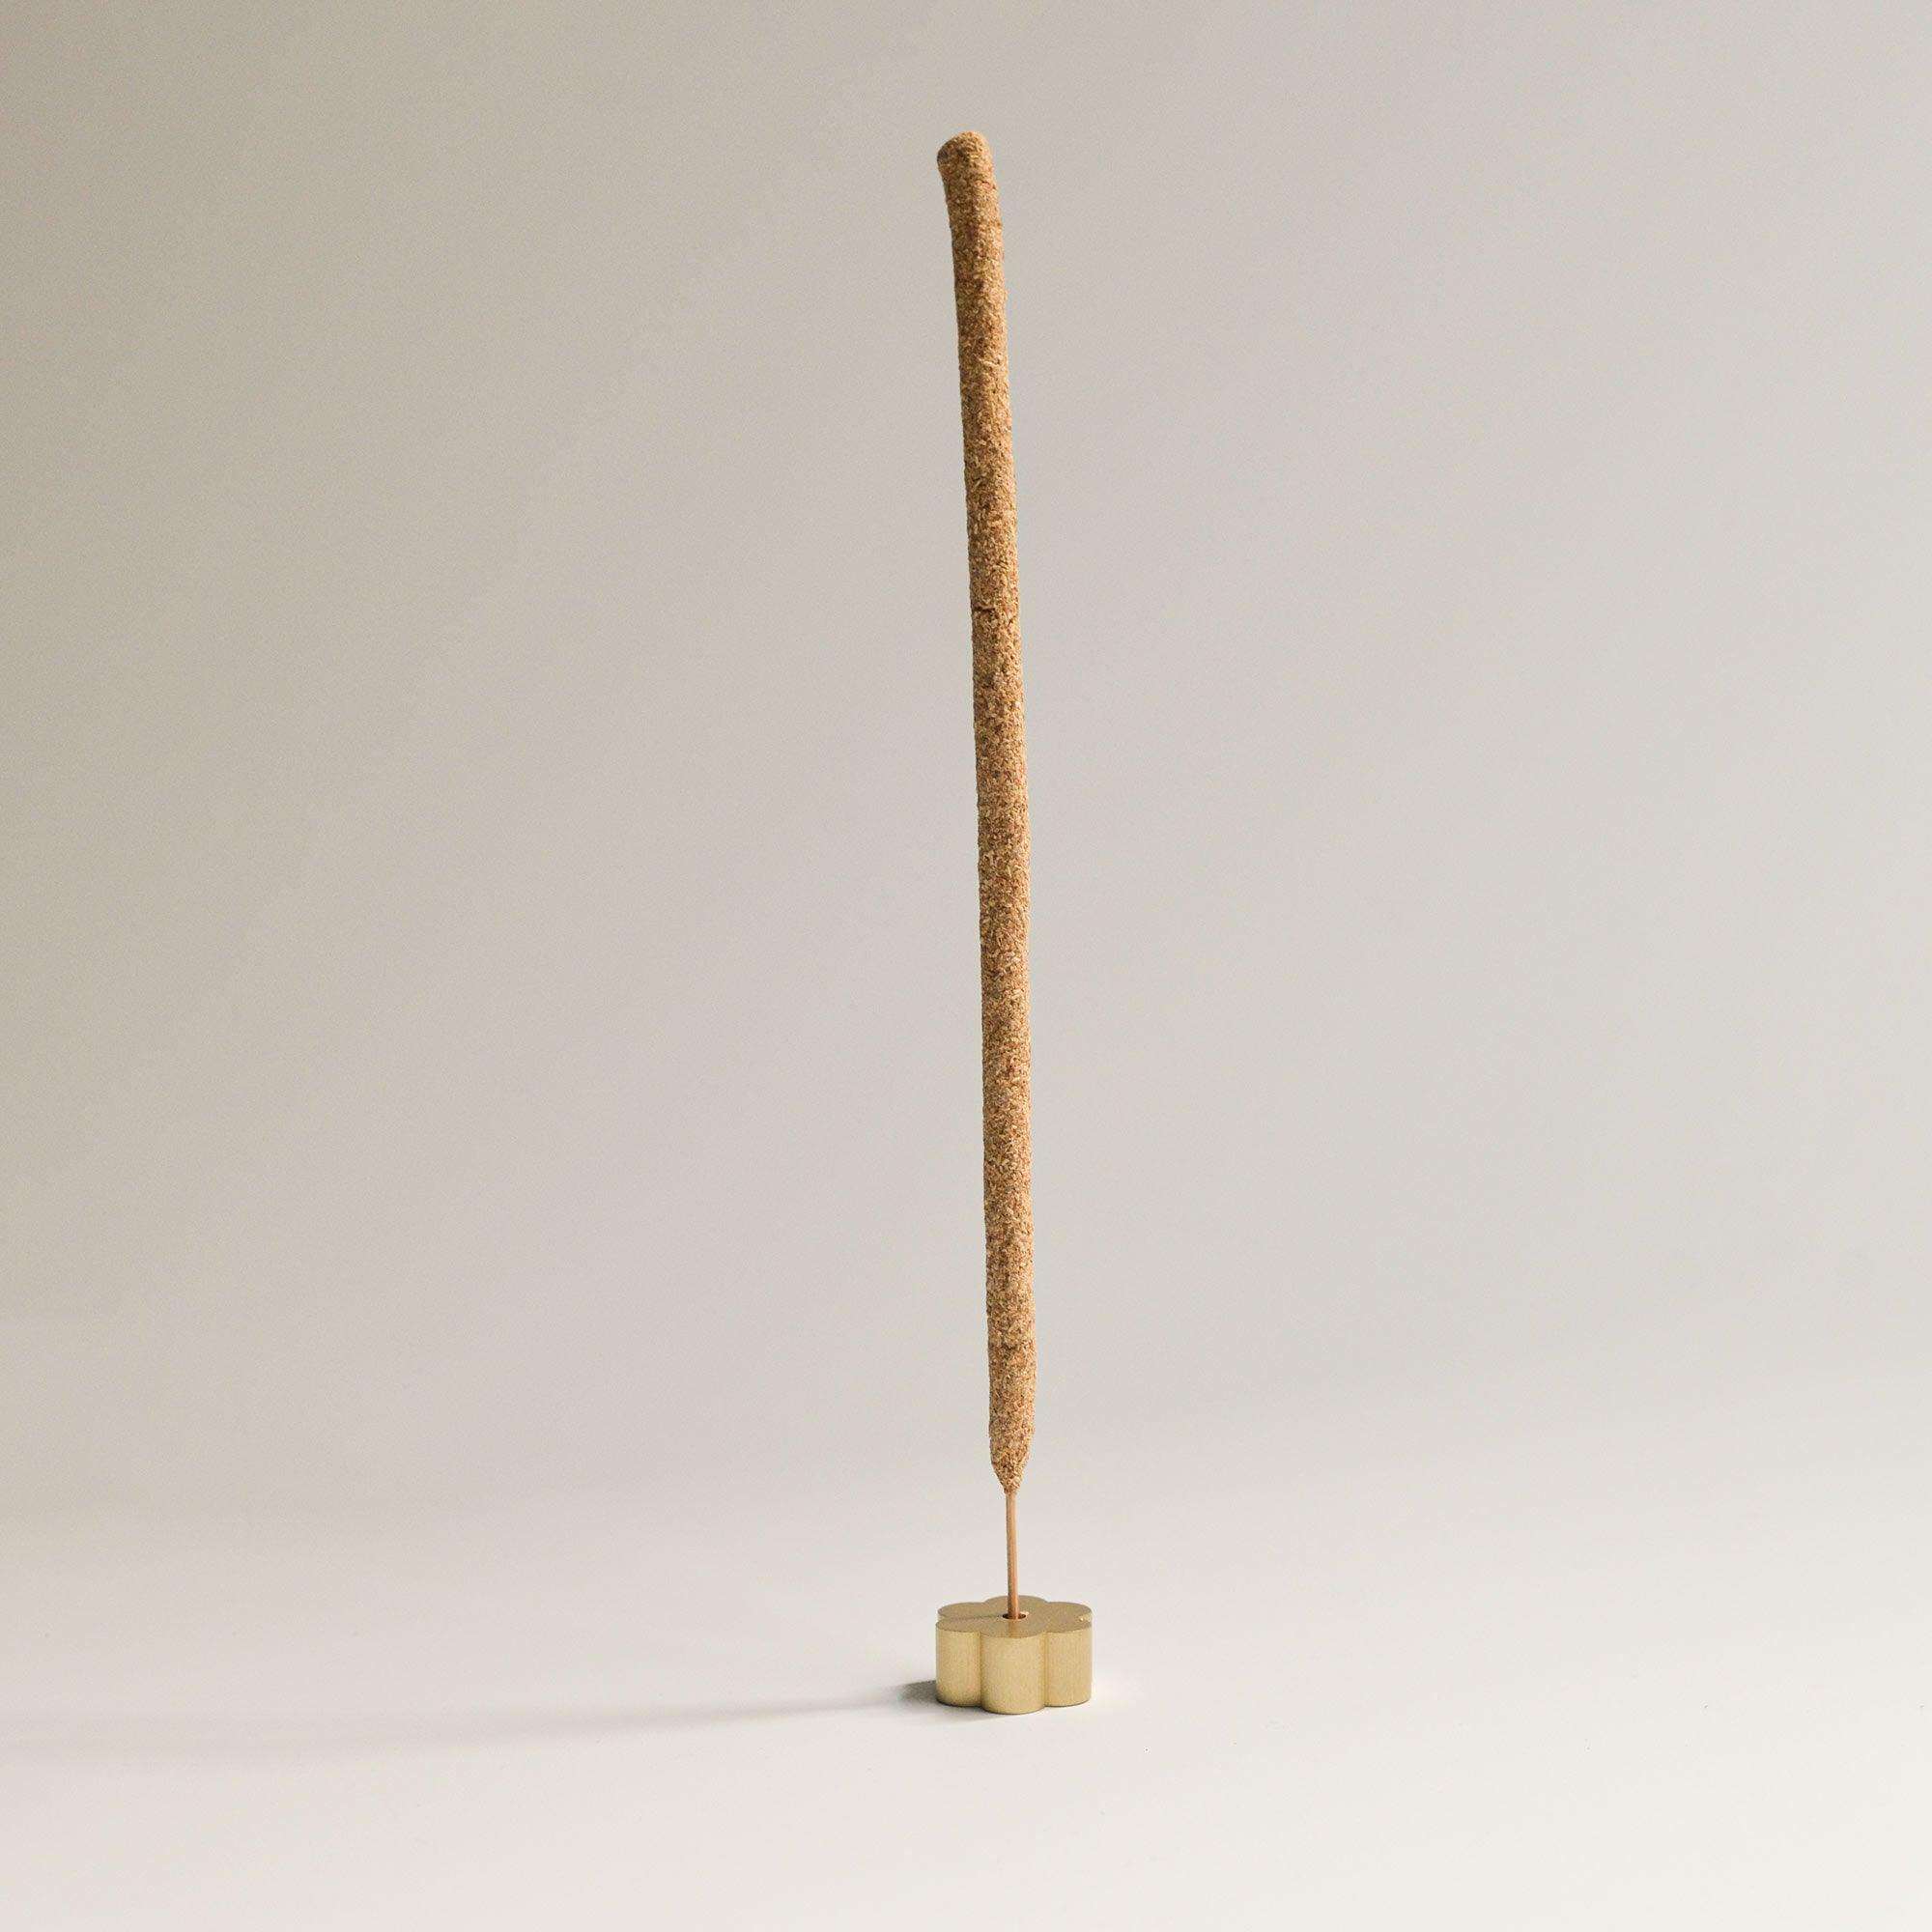 flower shaped incense holder with incense stick